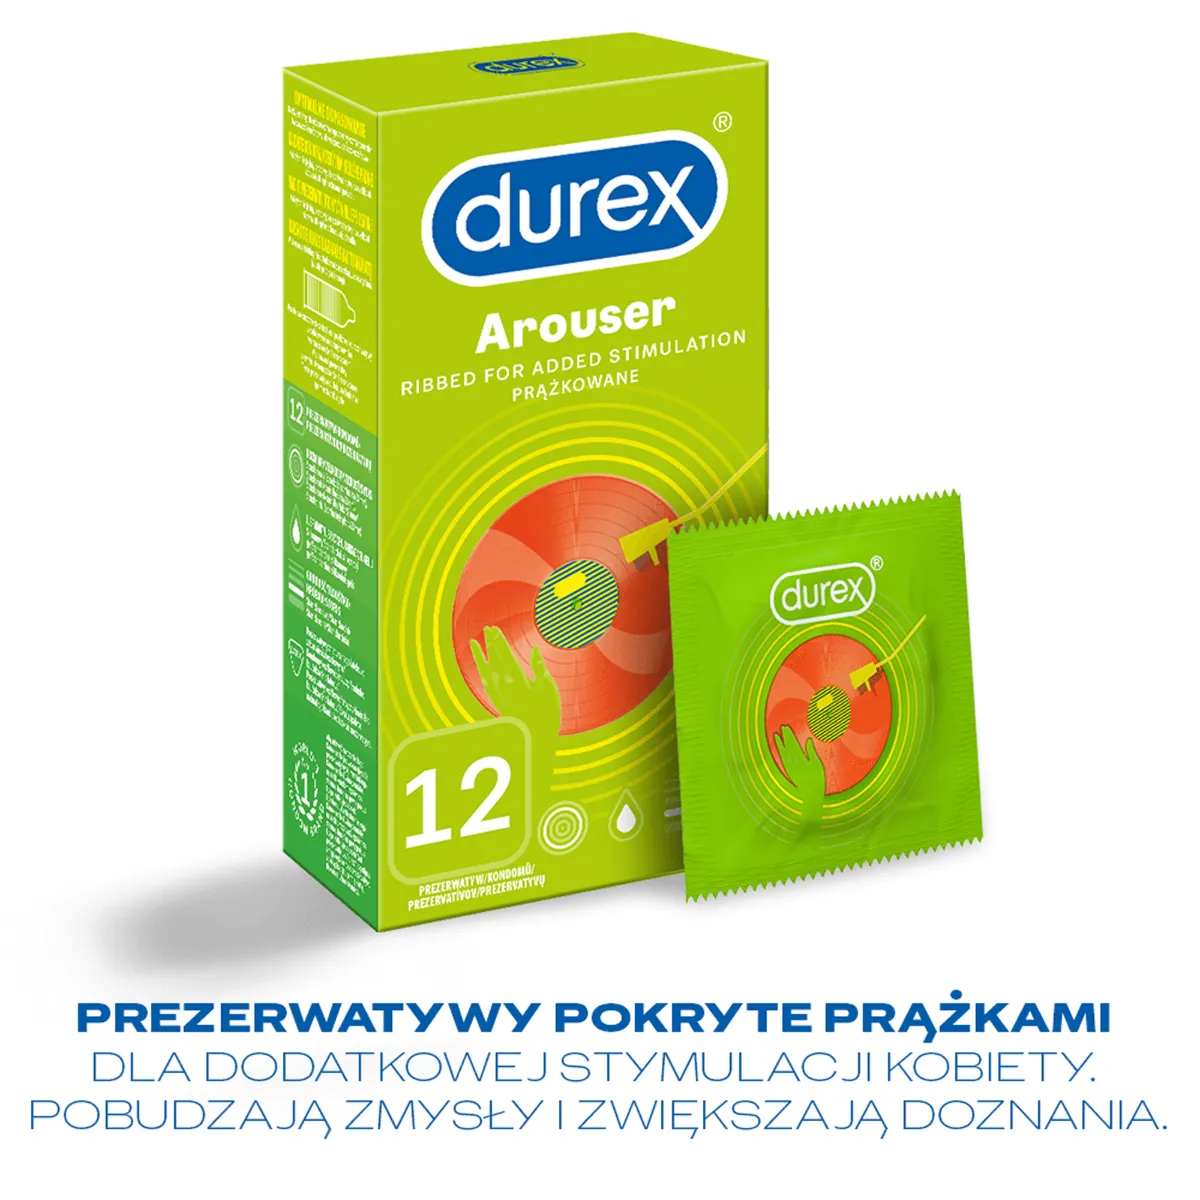 Prezerwatywy Durex Arouser, 12 szt. 